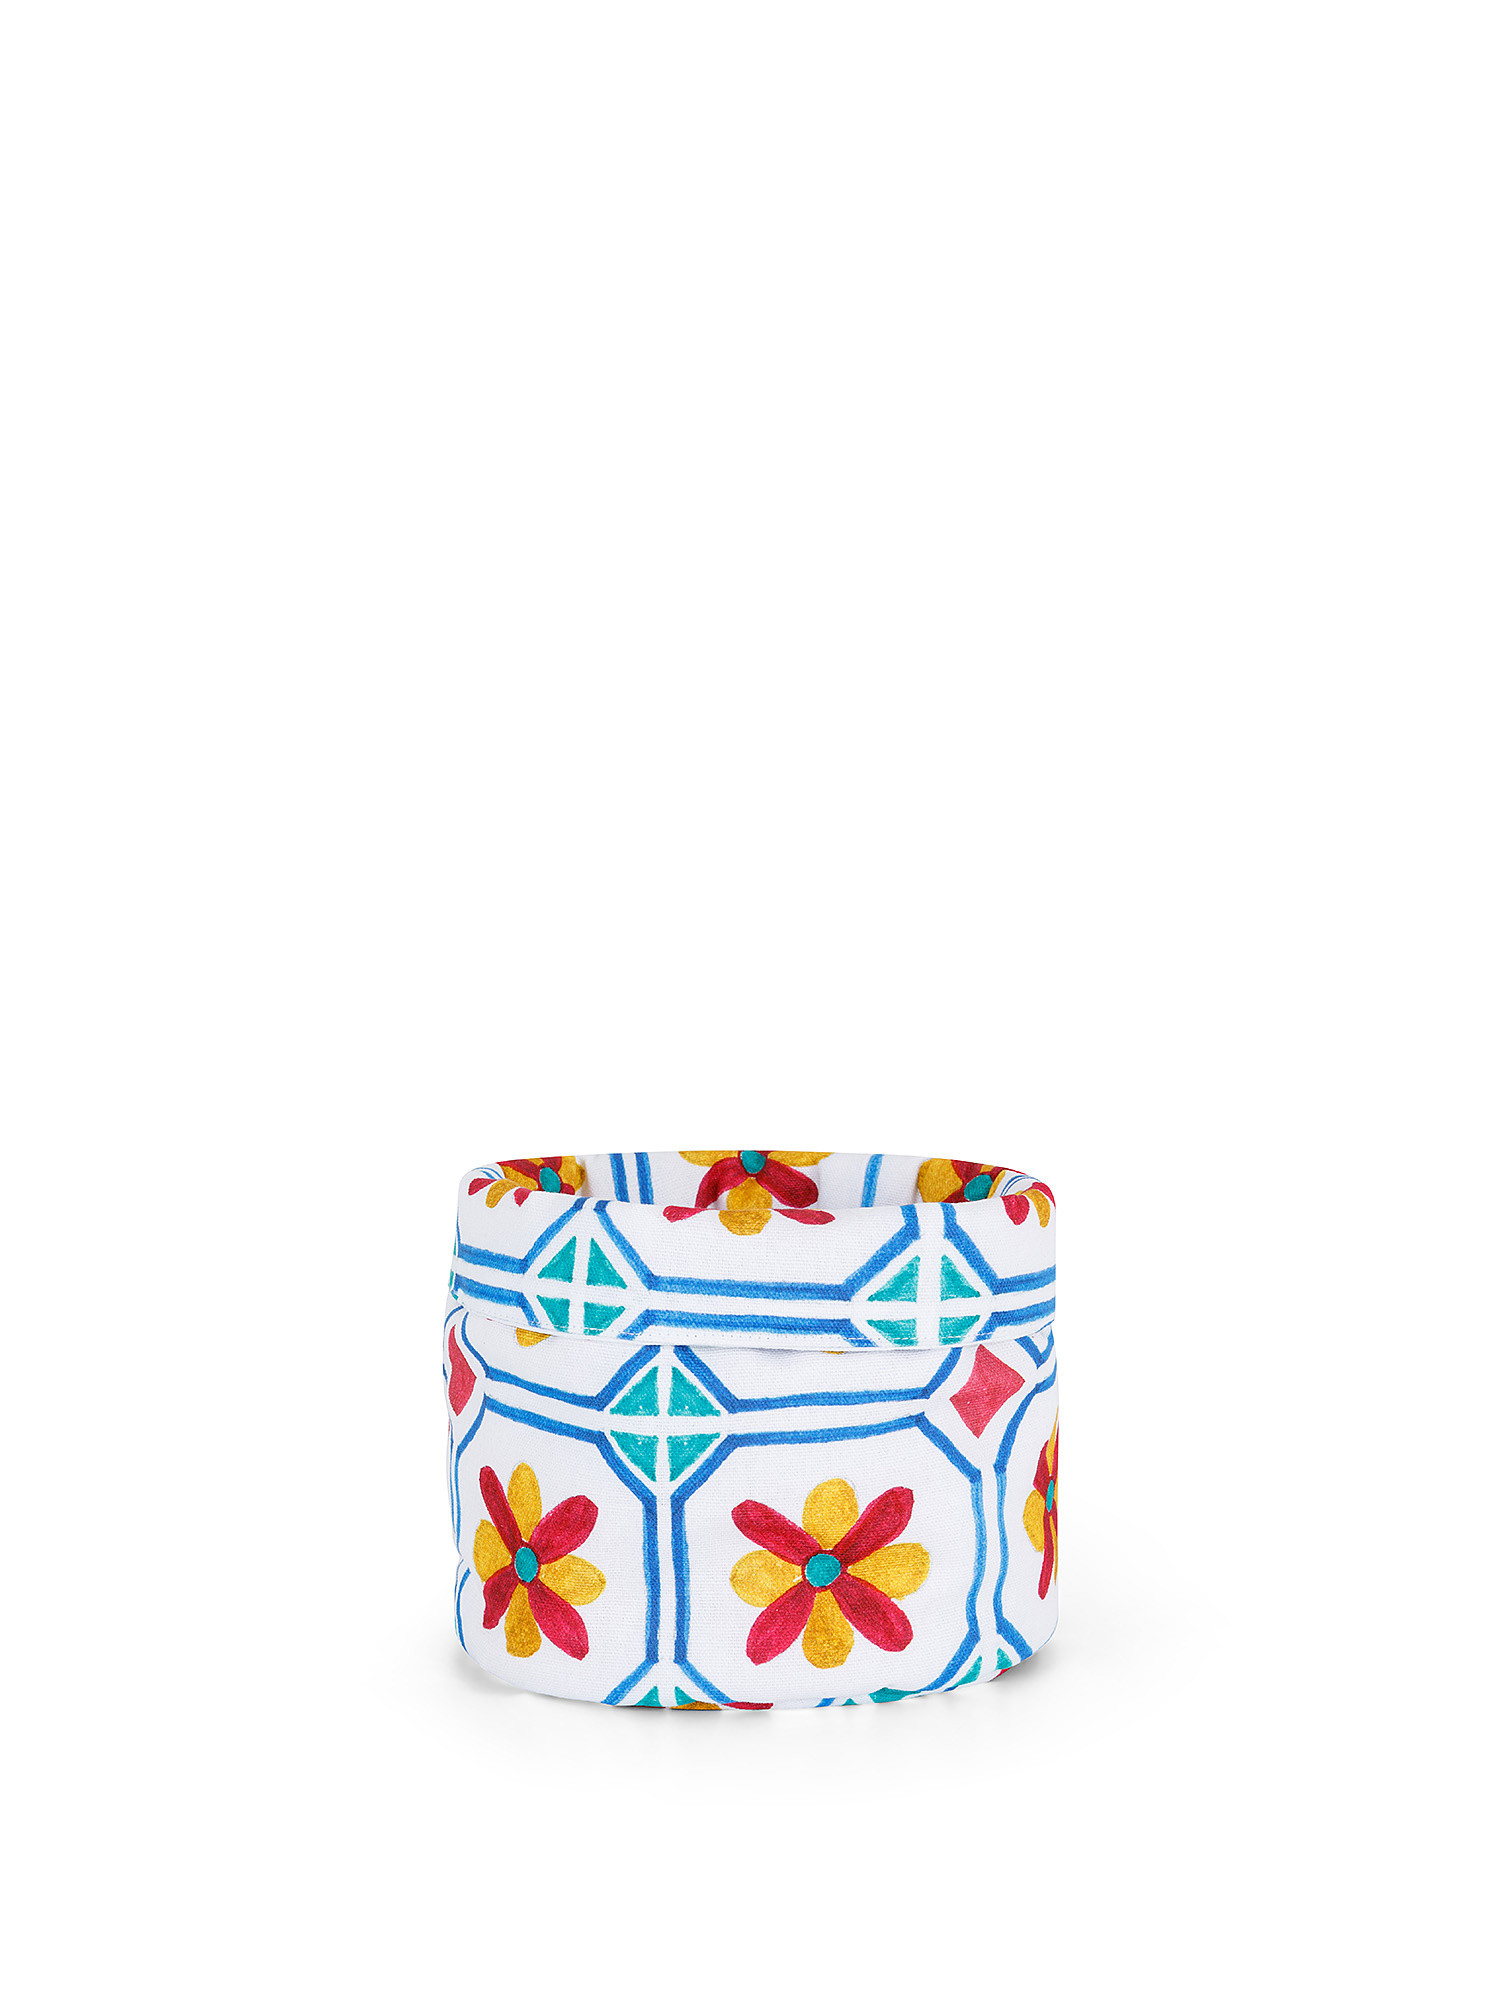 100% cotton basket with tile print, Multicolor, large image number 0